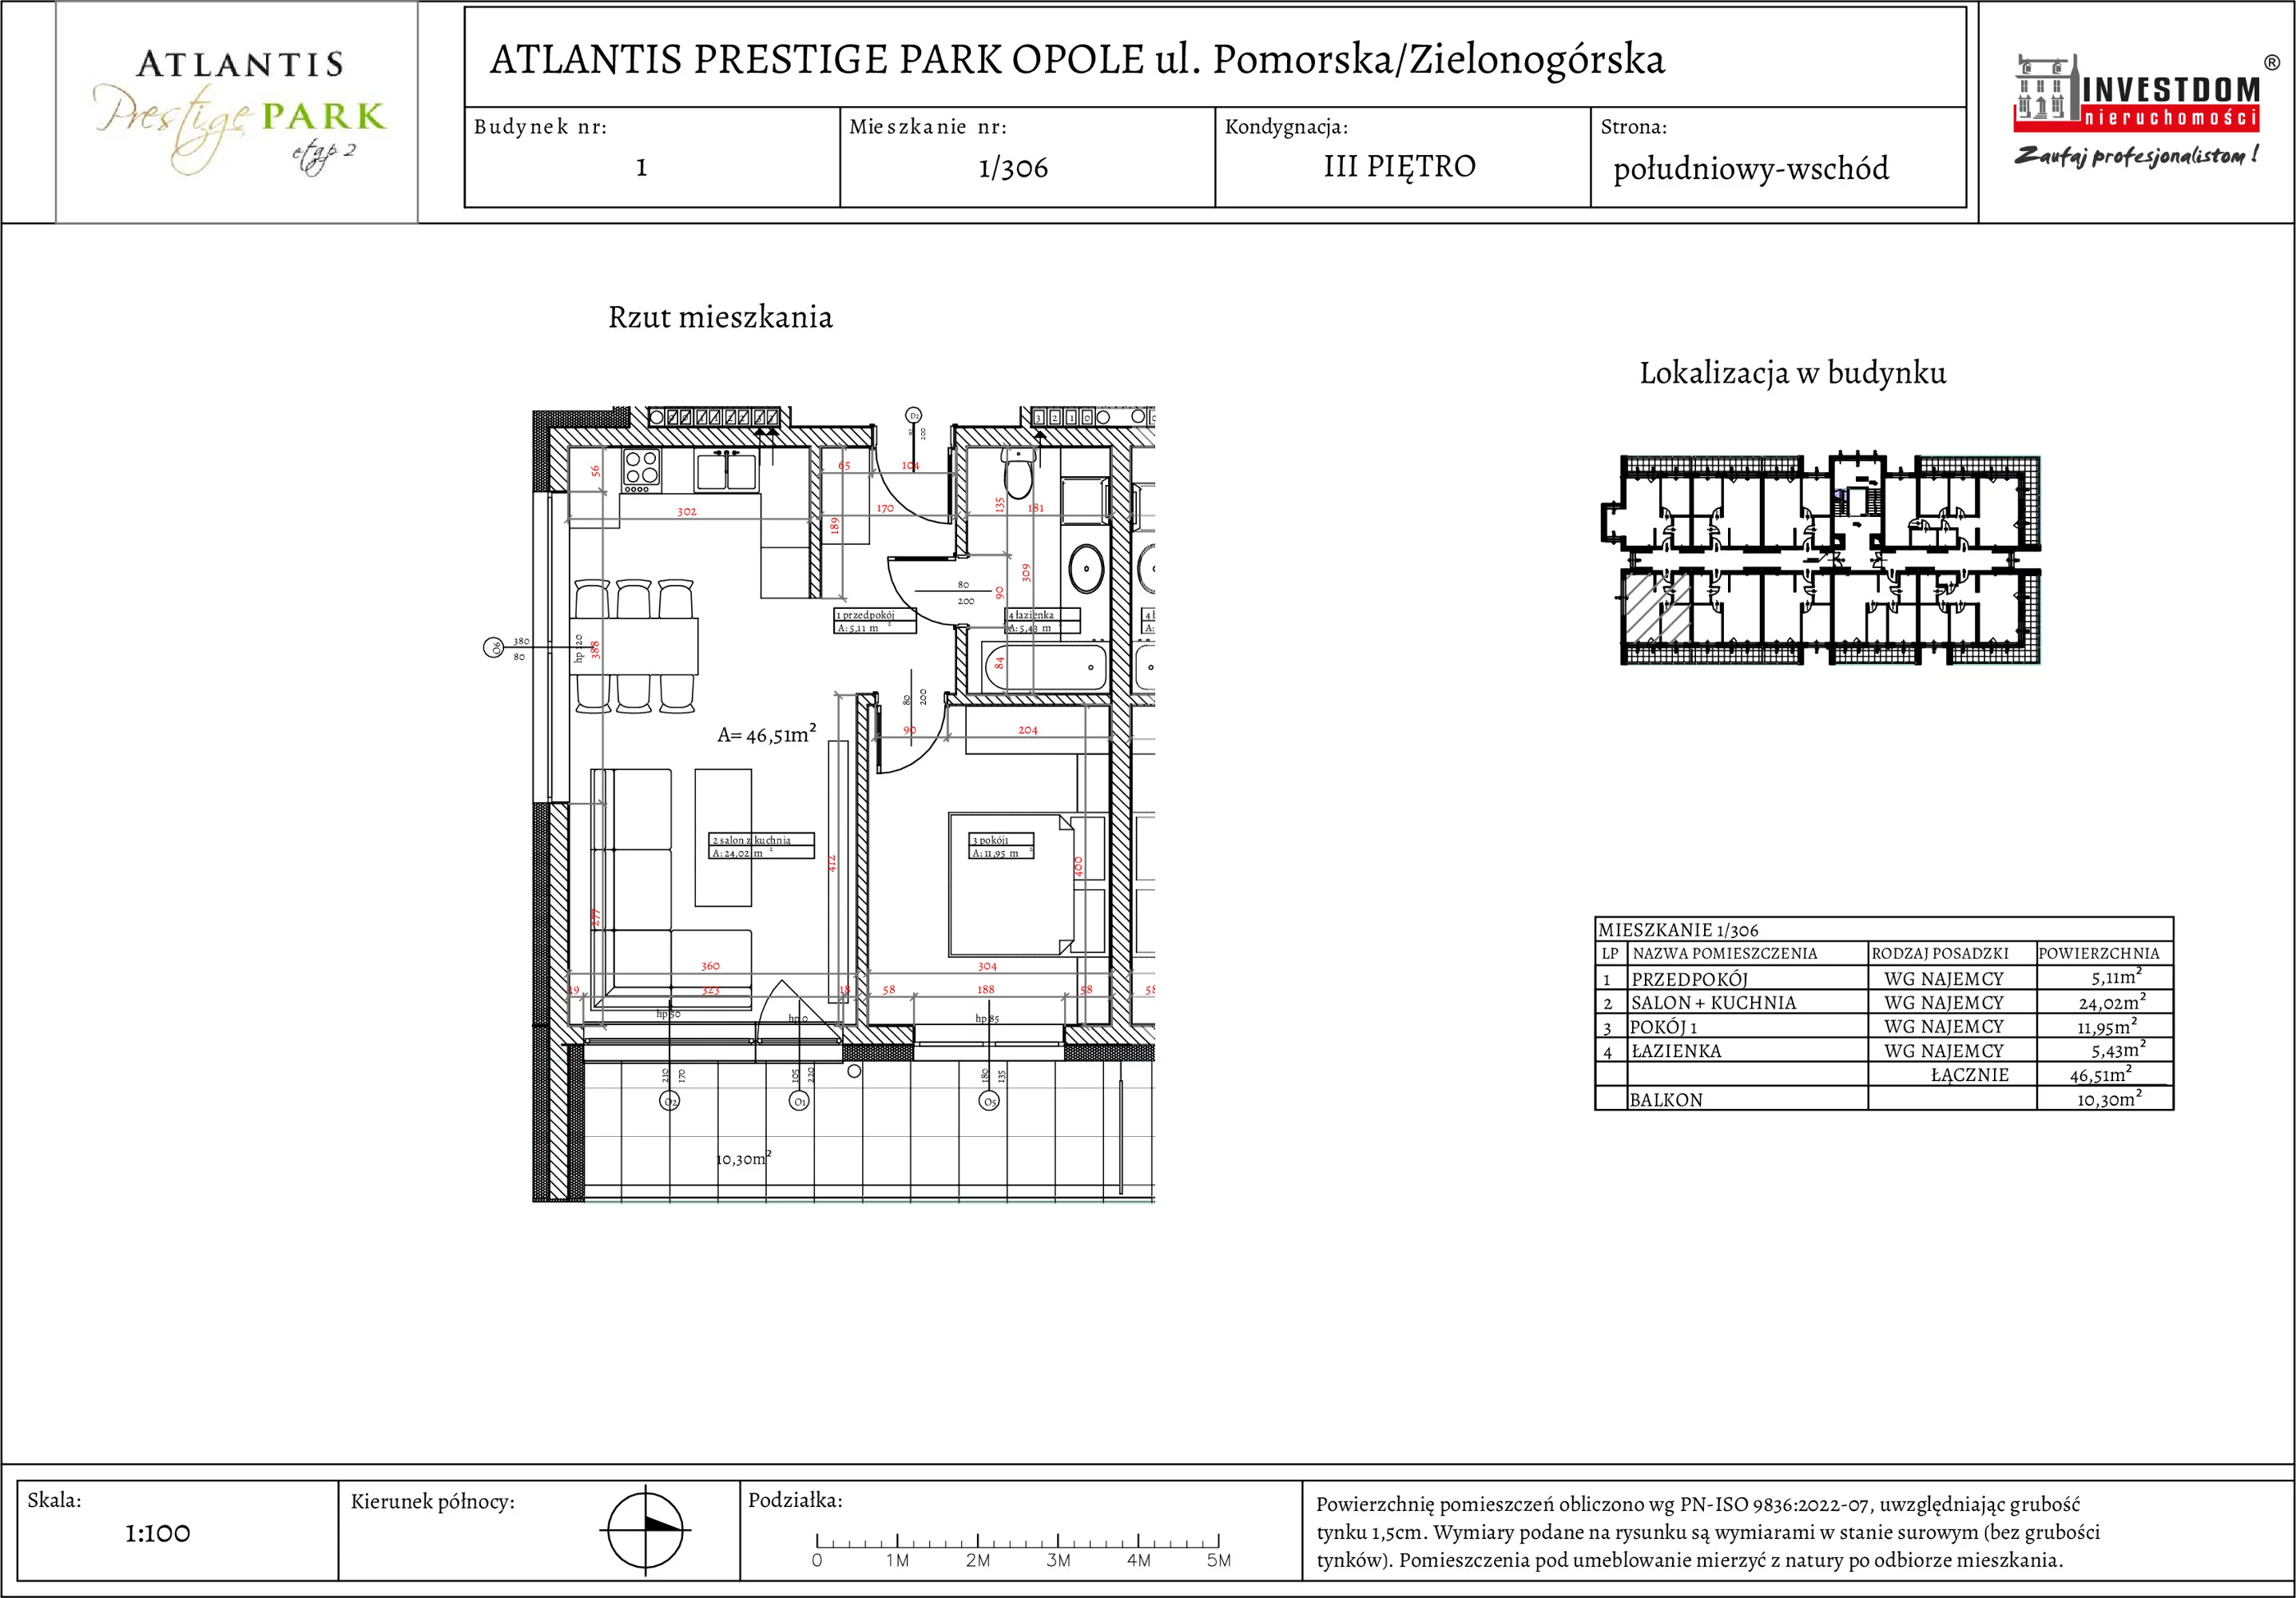 Apartament 46,51 m², piętro 3, oferta nr 1/306, Atlantis Prestige Park, Opole, Malinka, ul. Pomorska / Zielonogórska / Harcmistrza Kamińskiego